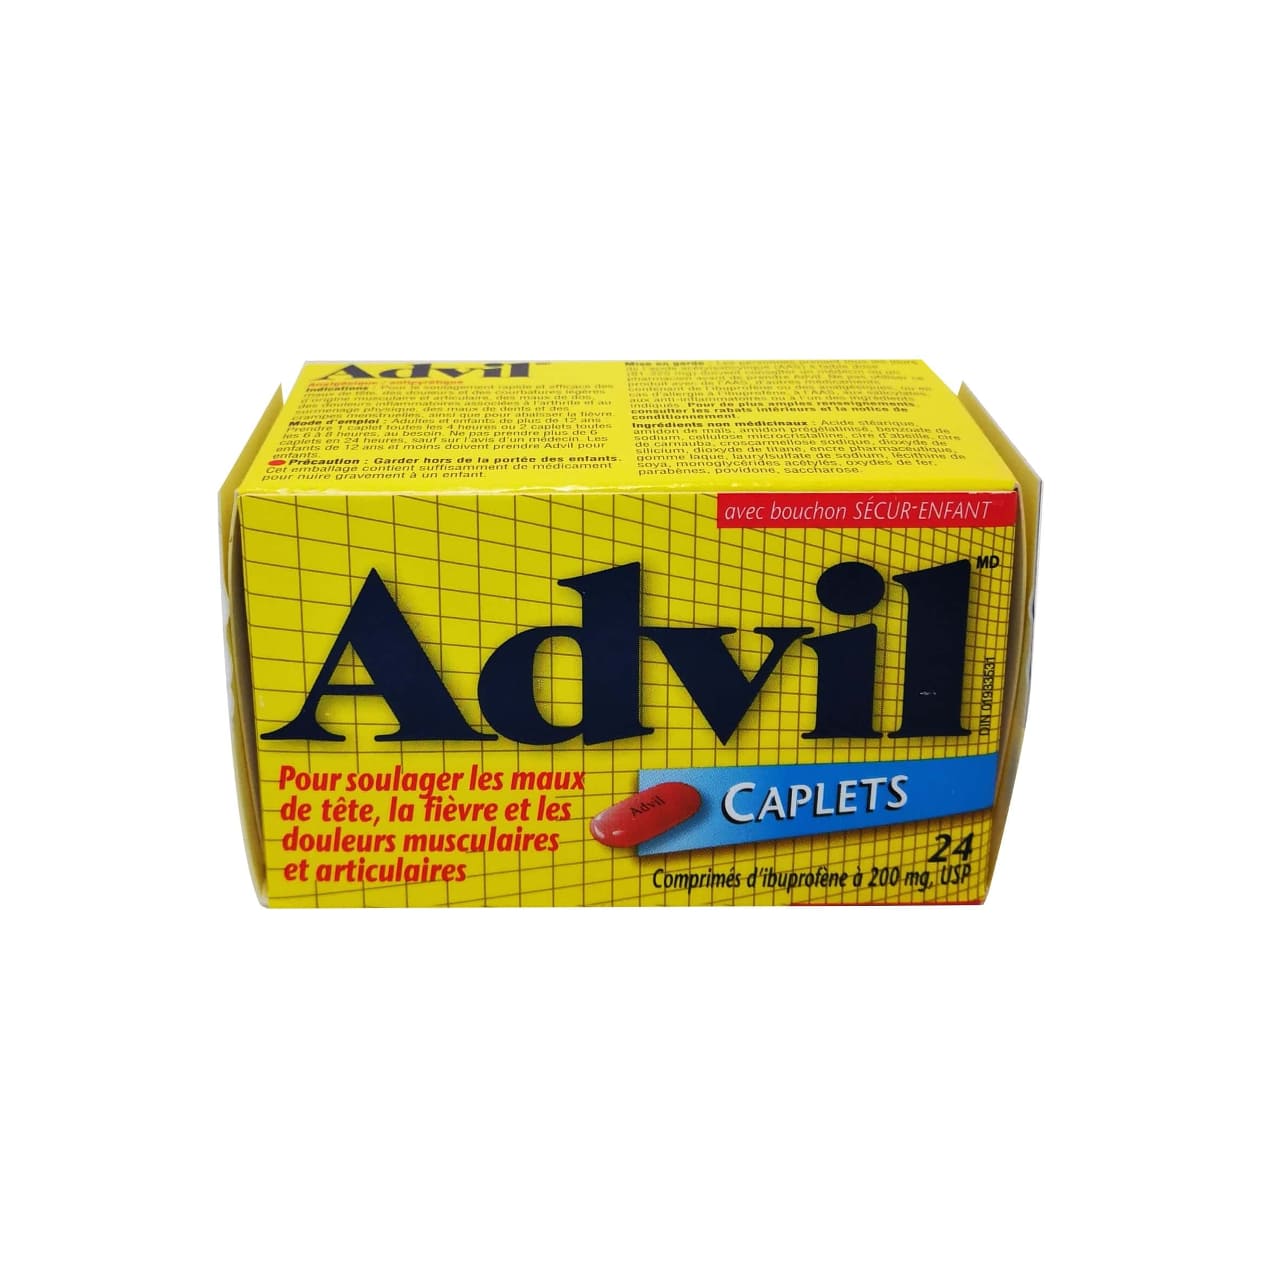 French label for Advil Ibuprofen 200mg Caplets 24 pack